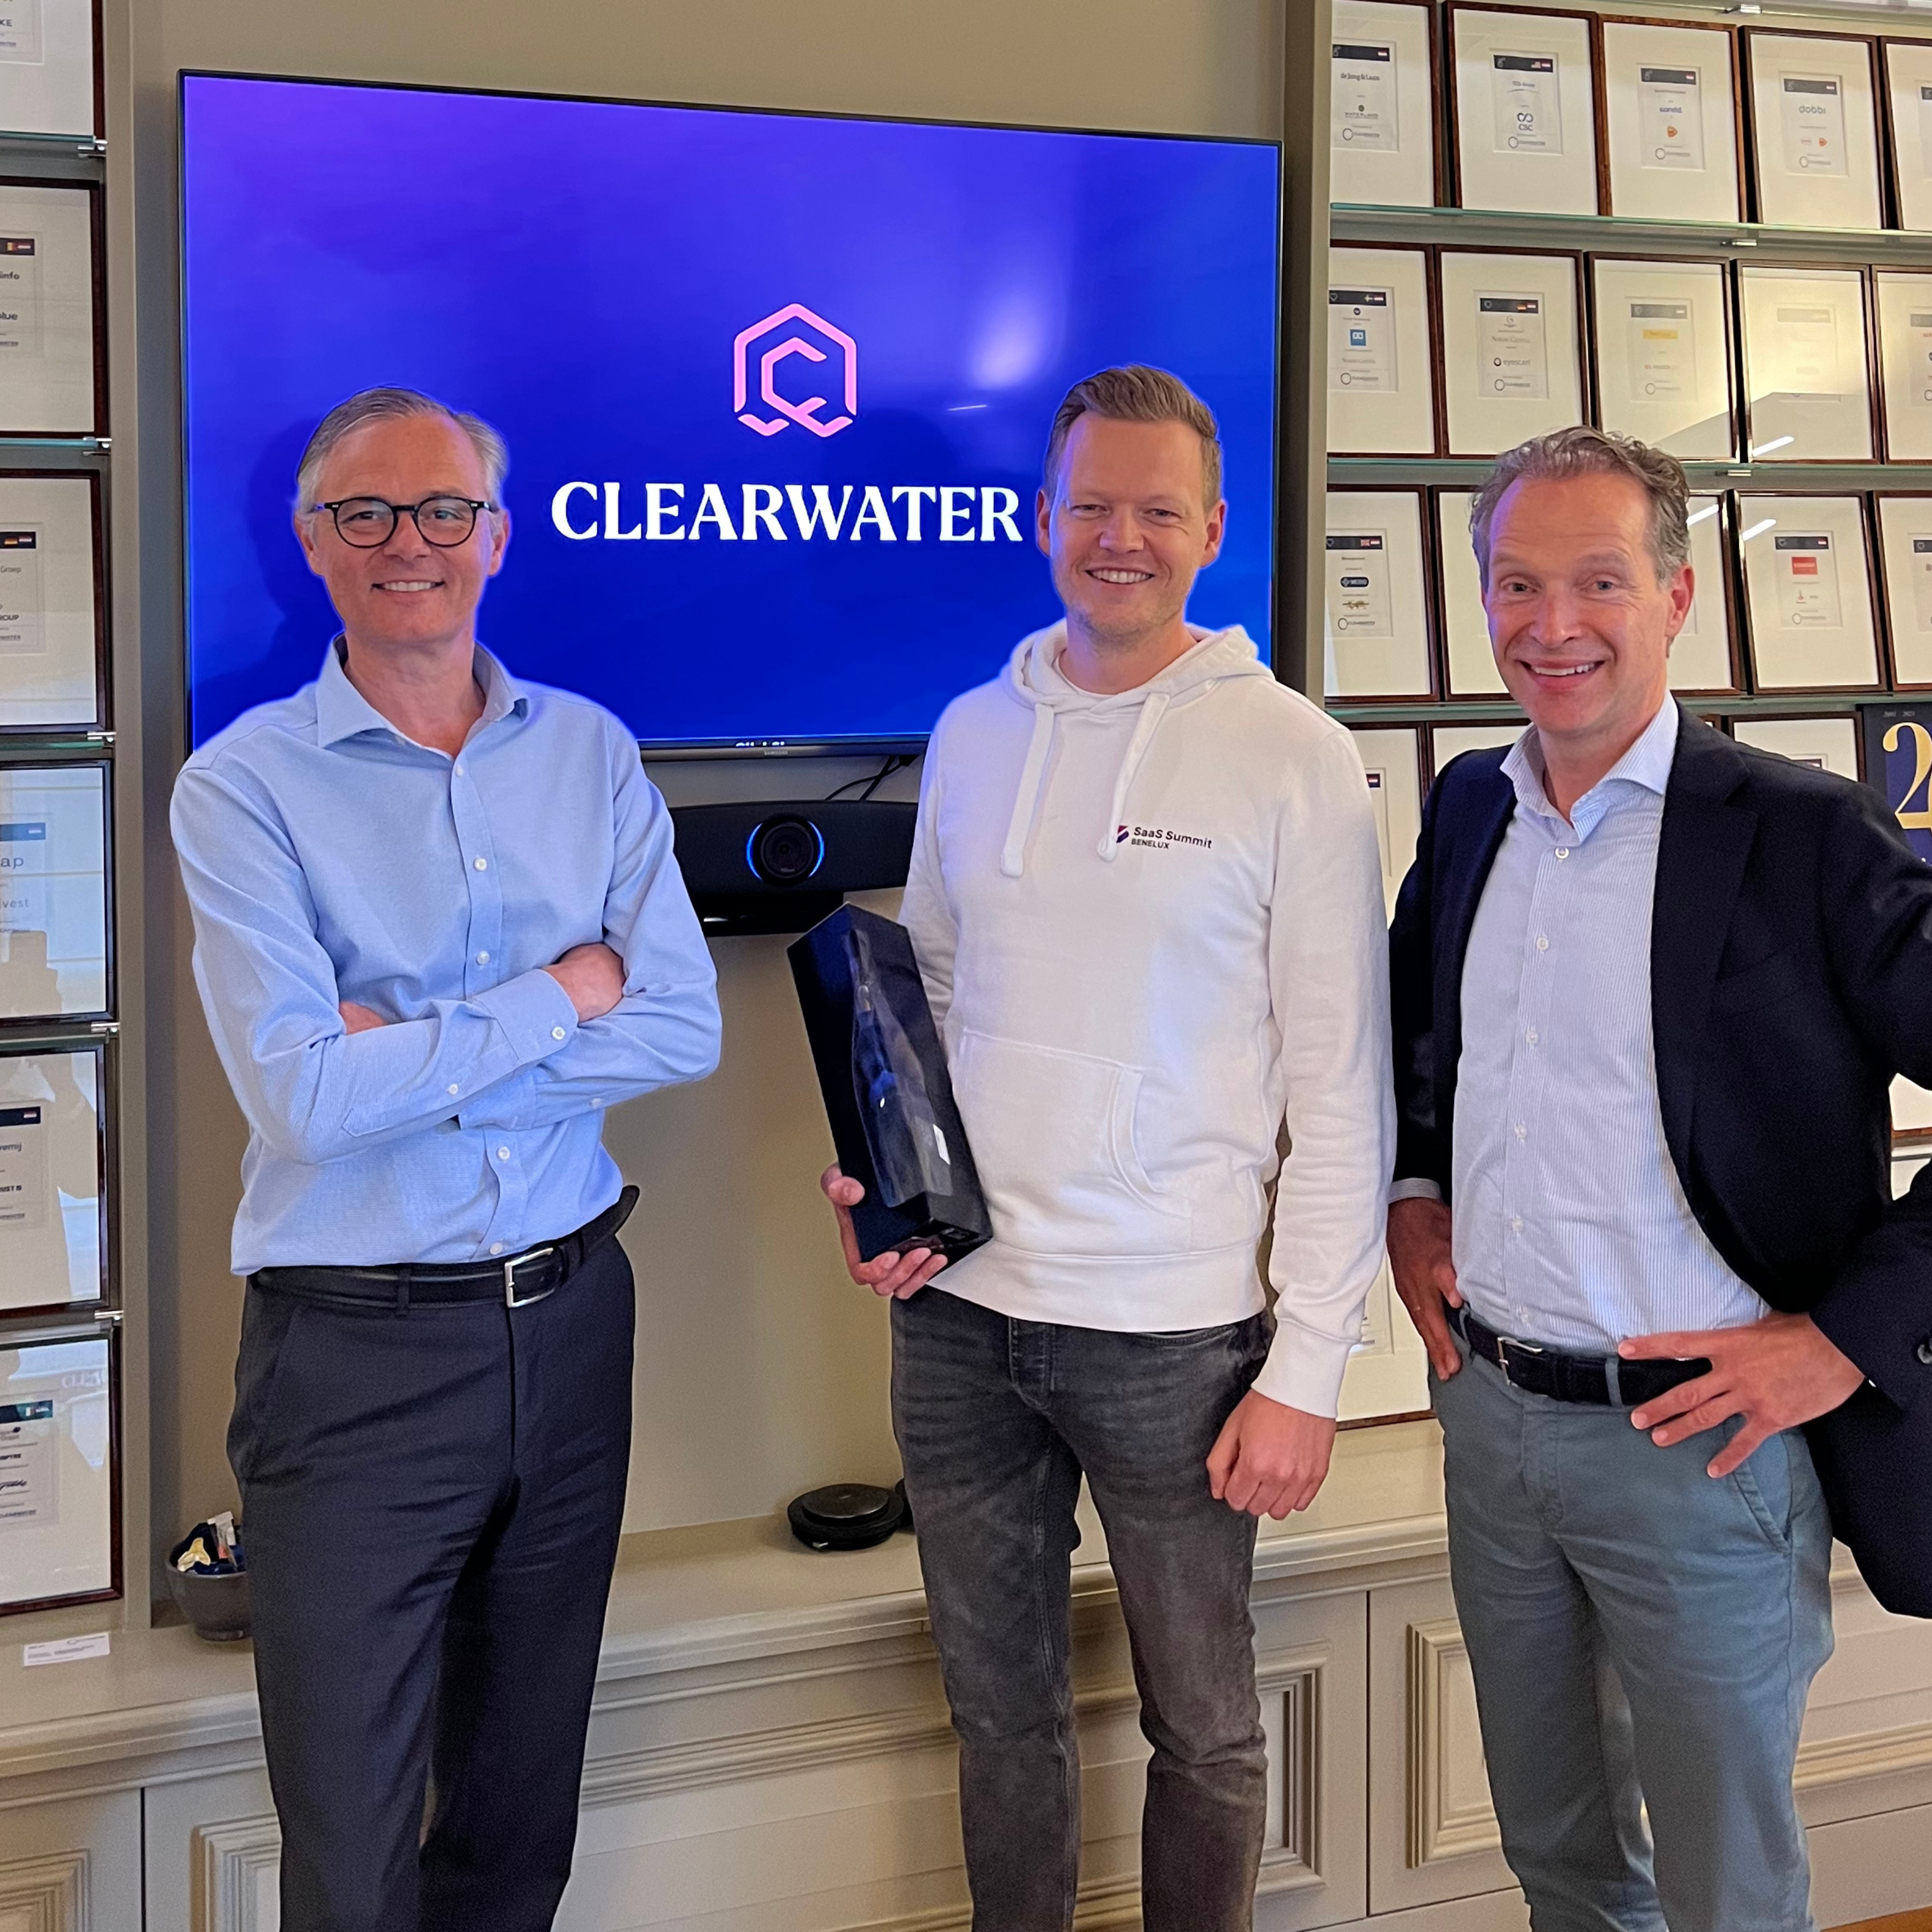 Clearwater partner of SaaS Summit Benelux